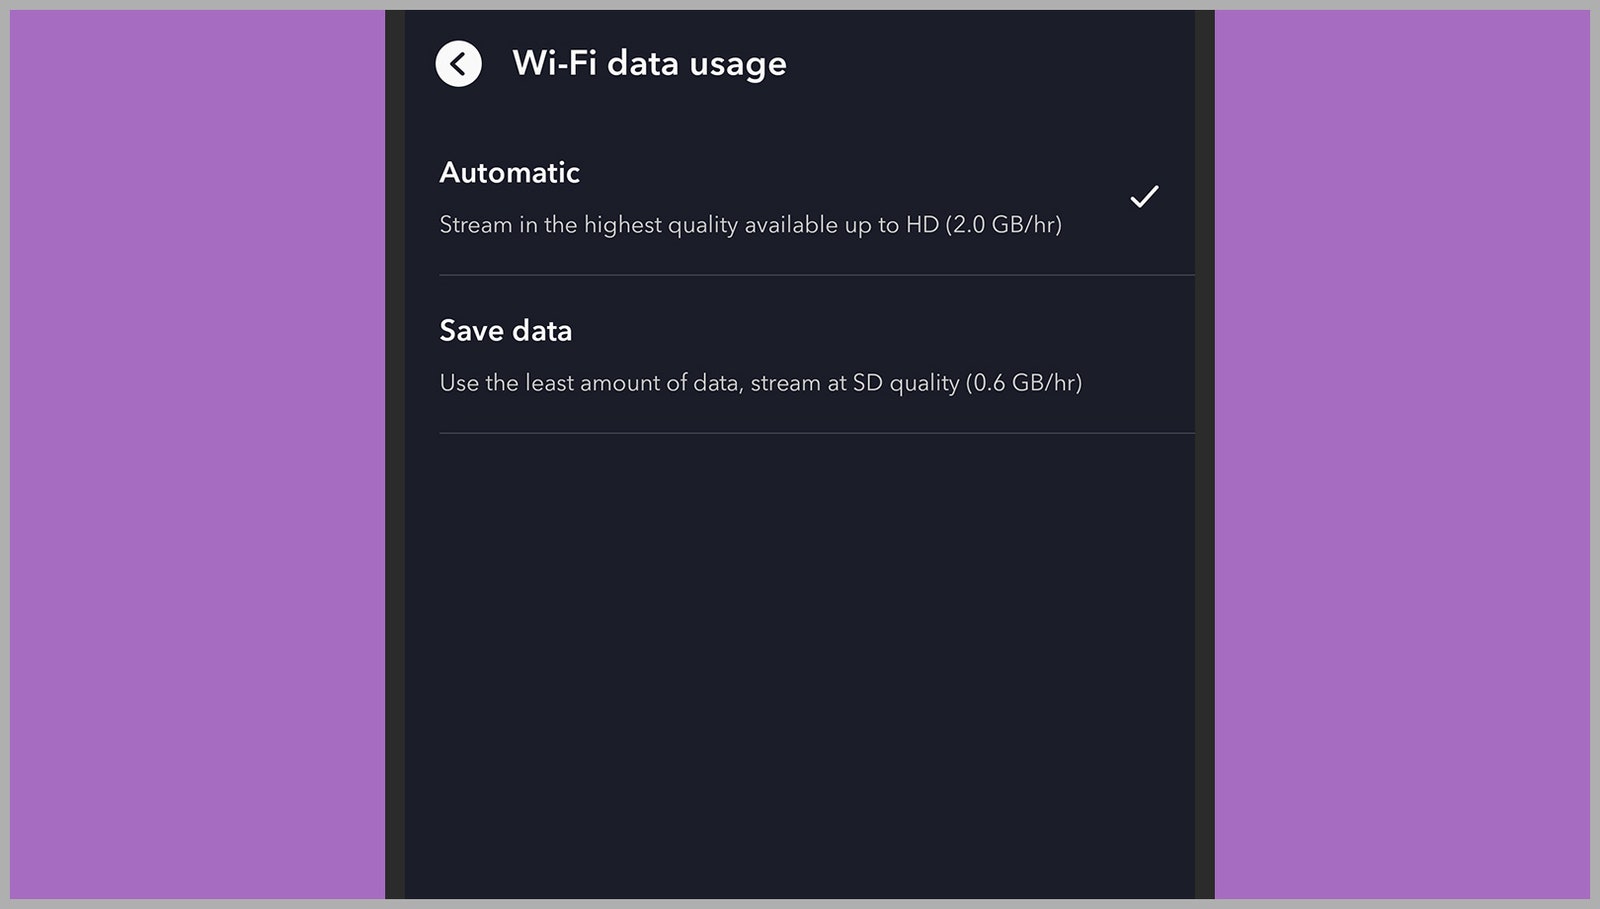 Screenshot of WiFi data usage settings on smartphone